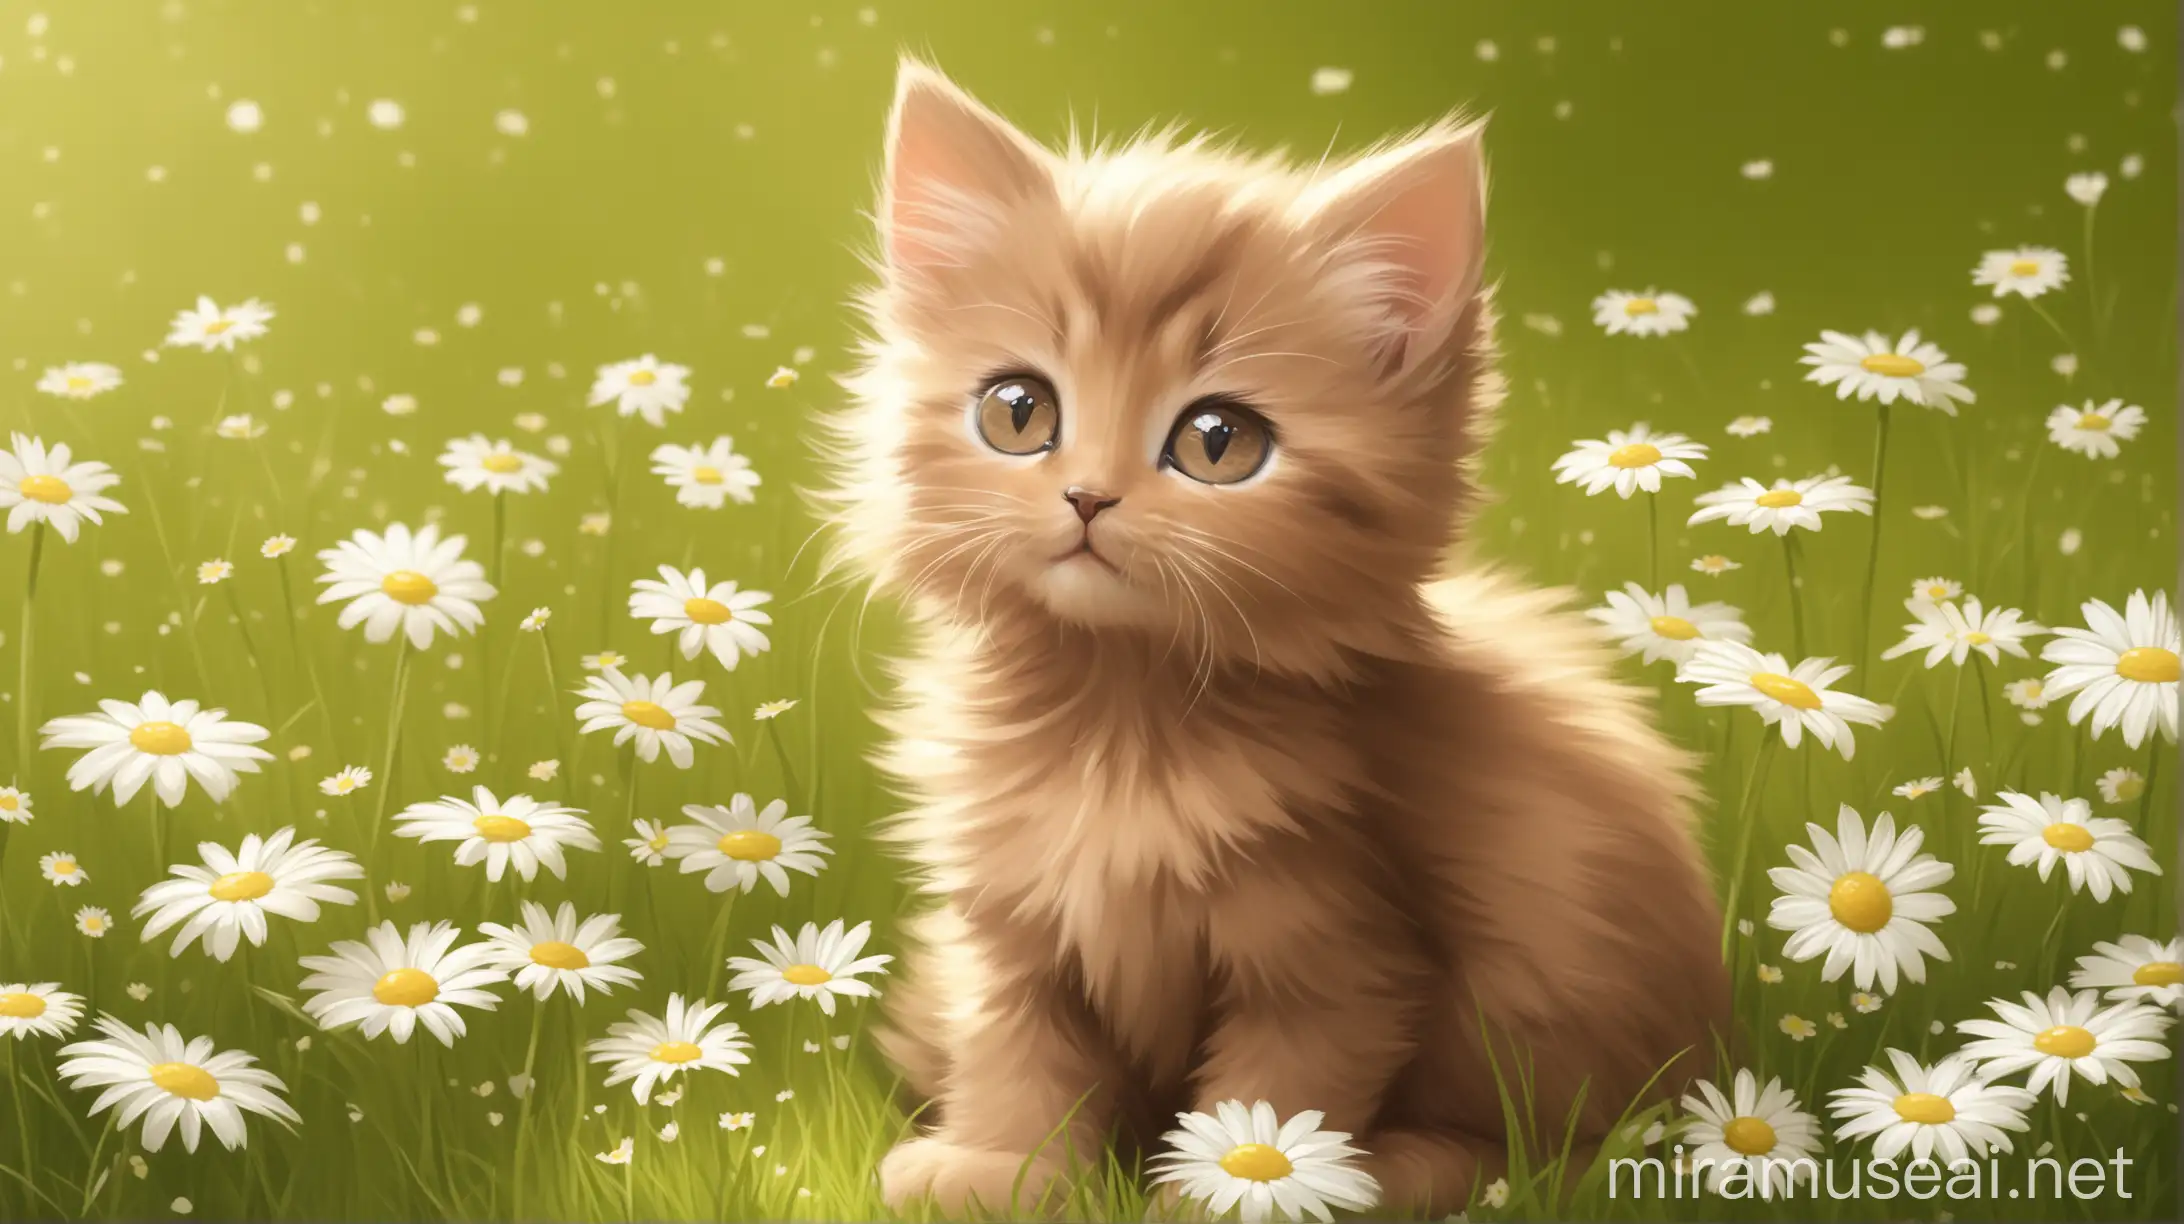 Adorable Brown Kitten Sitting Among Daisies